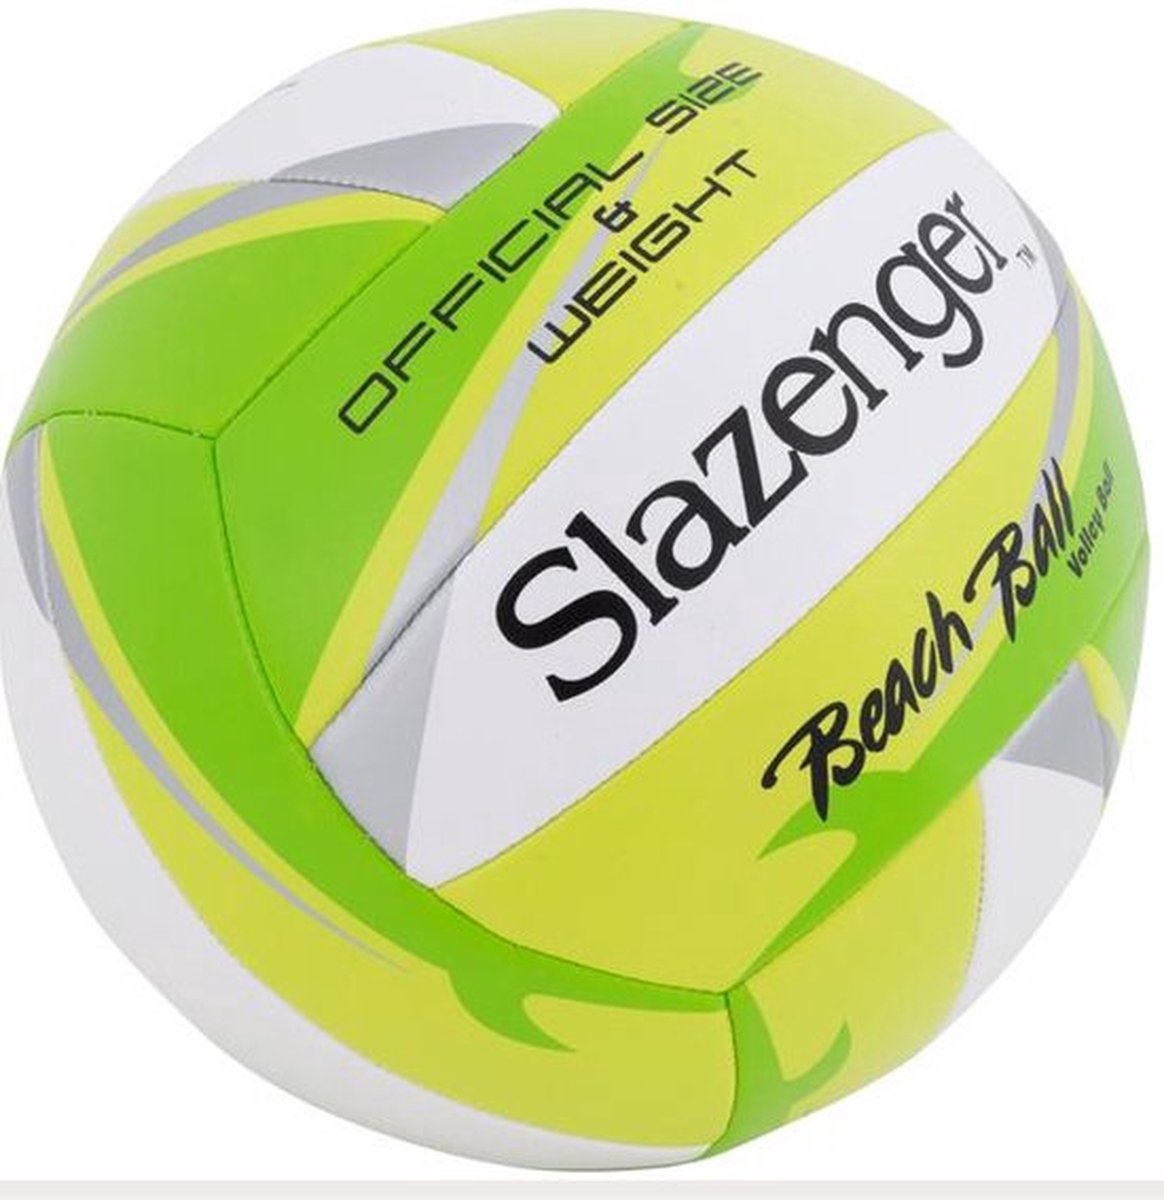 Volleybal - Slazenger - Bal - Strandbal - Sport - Spel - Groen - Geel